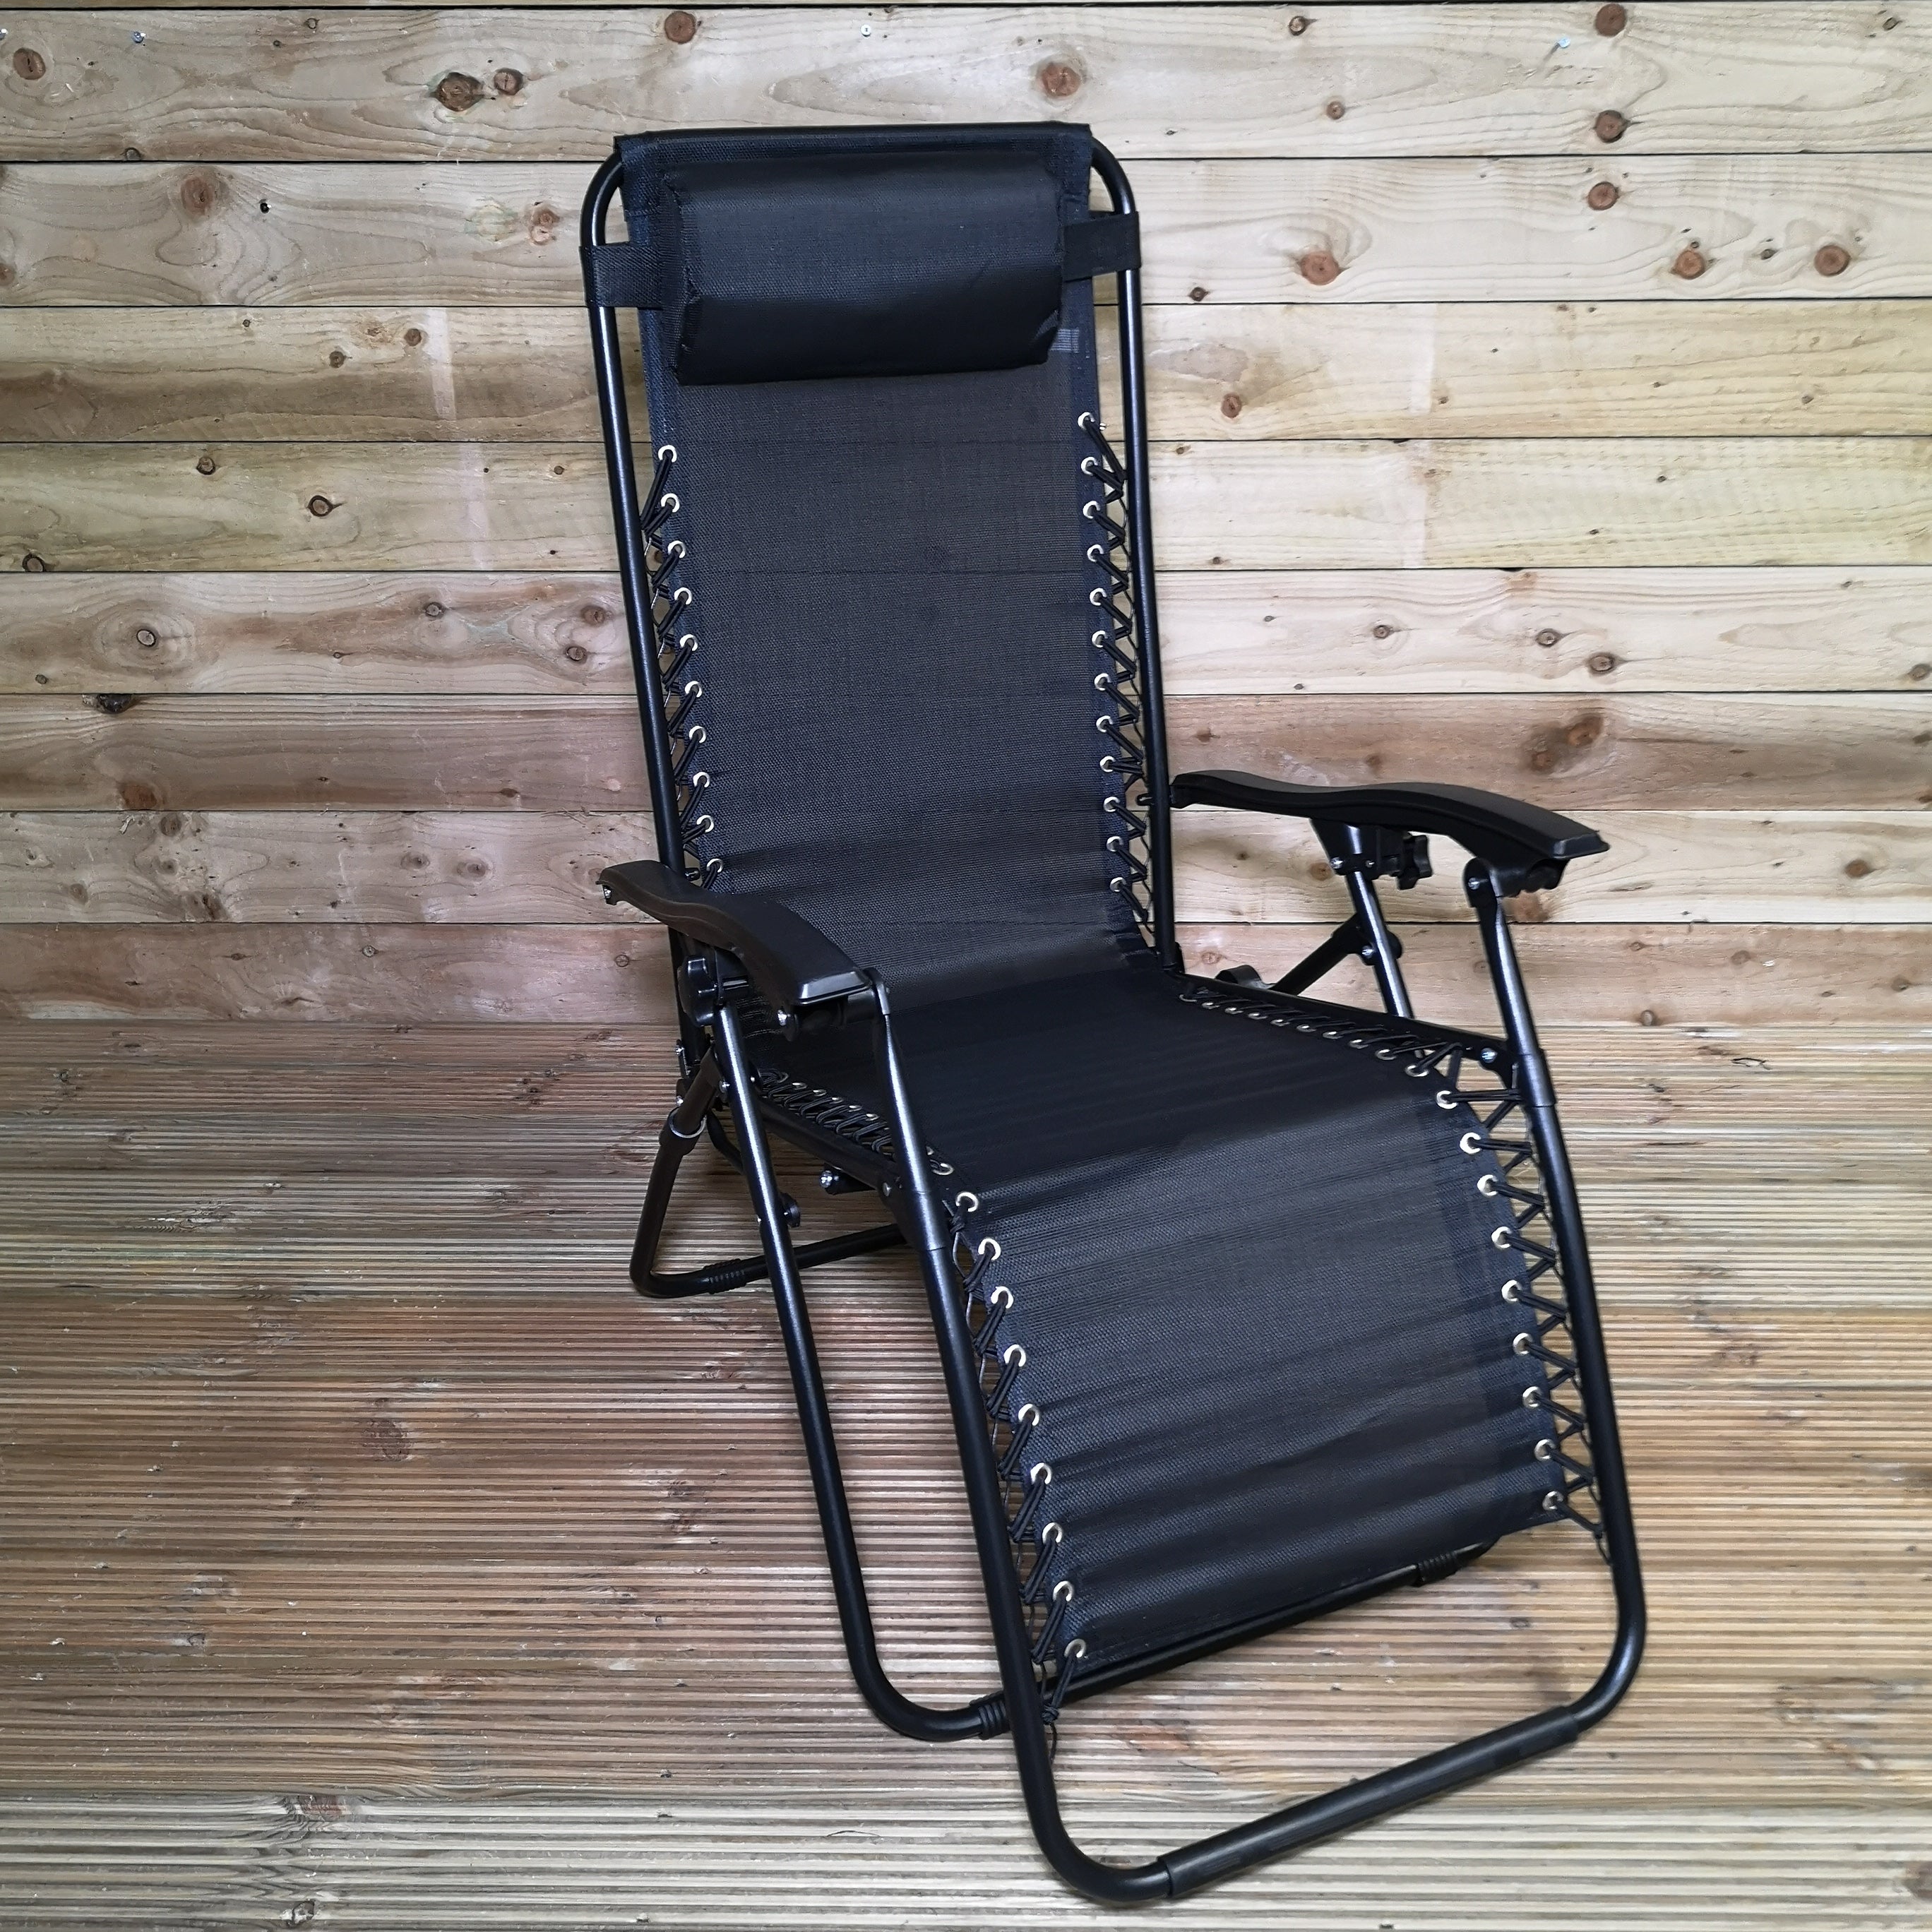 Pair of Multi Position Textoline Garden Relaxer Chair Lounger - All Black